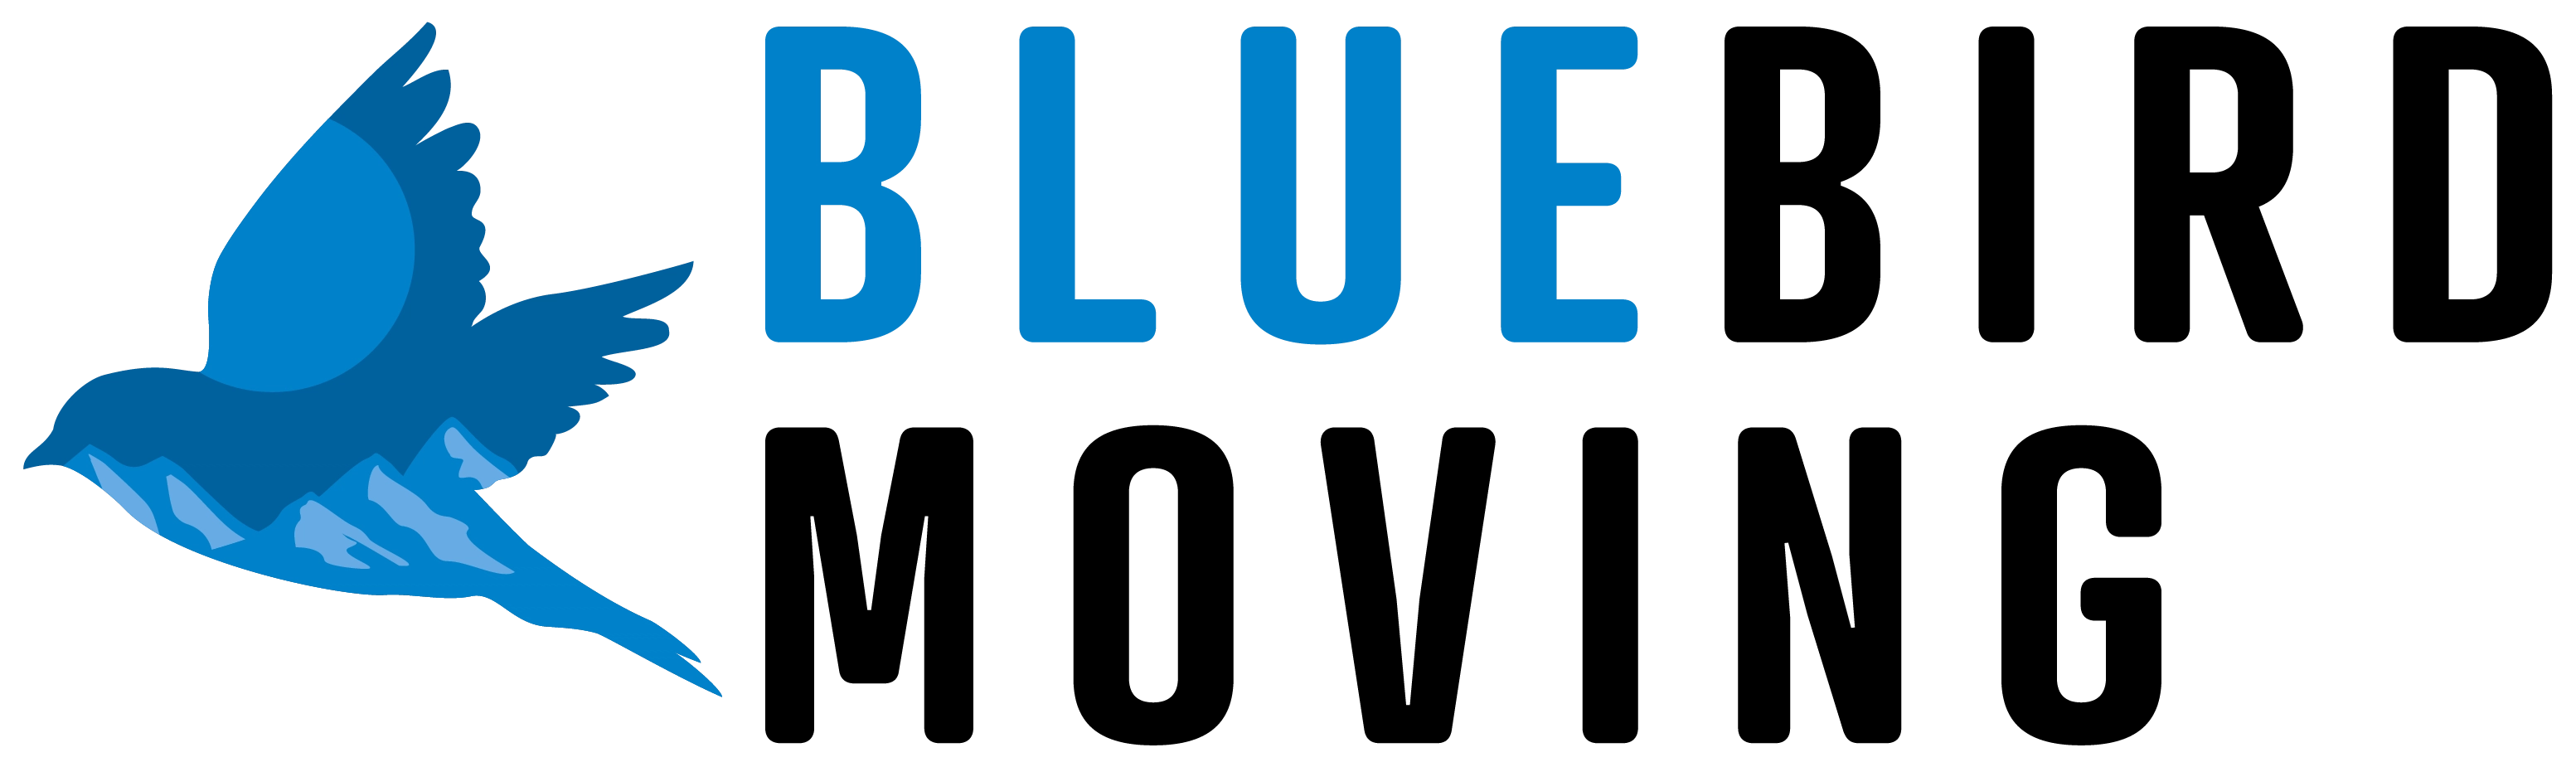 Bluebird Moving Logo